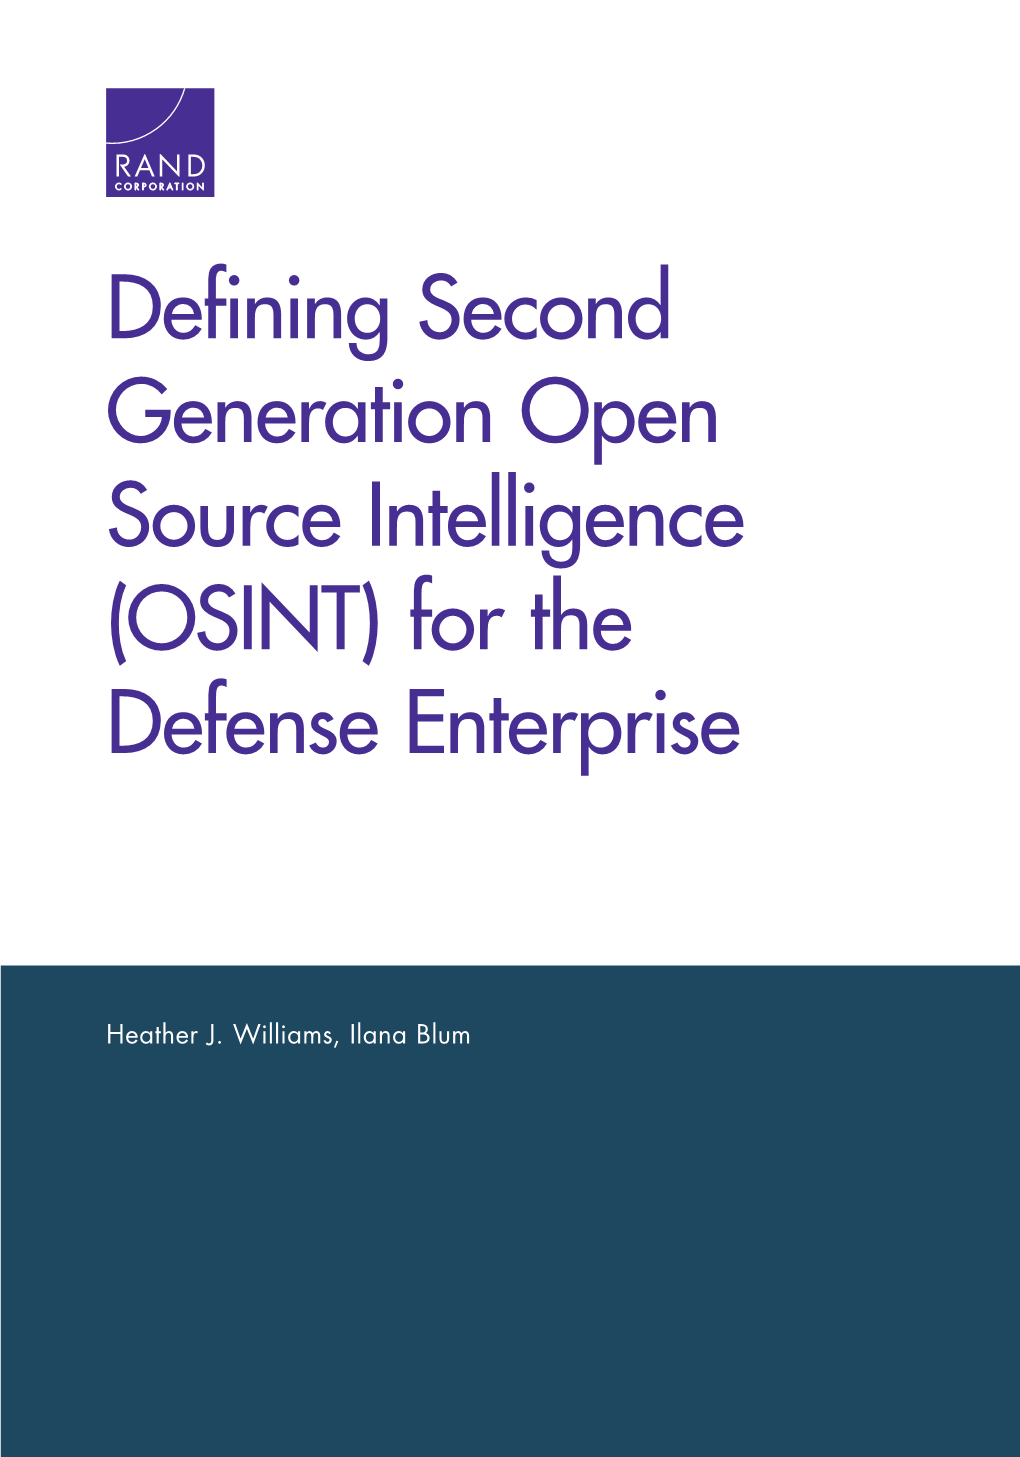 Defining Second Generation Open Source Intelligence (OSINT) for the Defense Enterprise